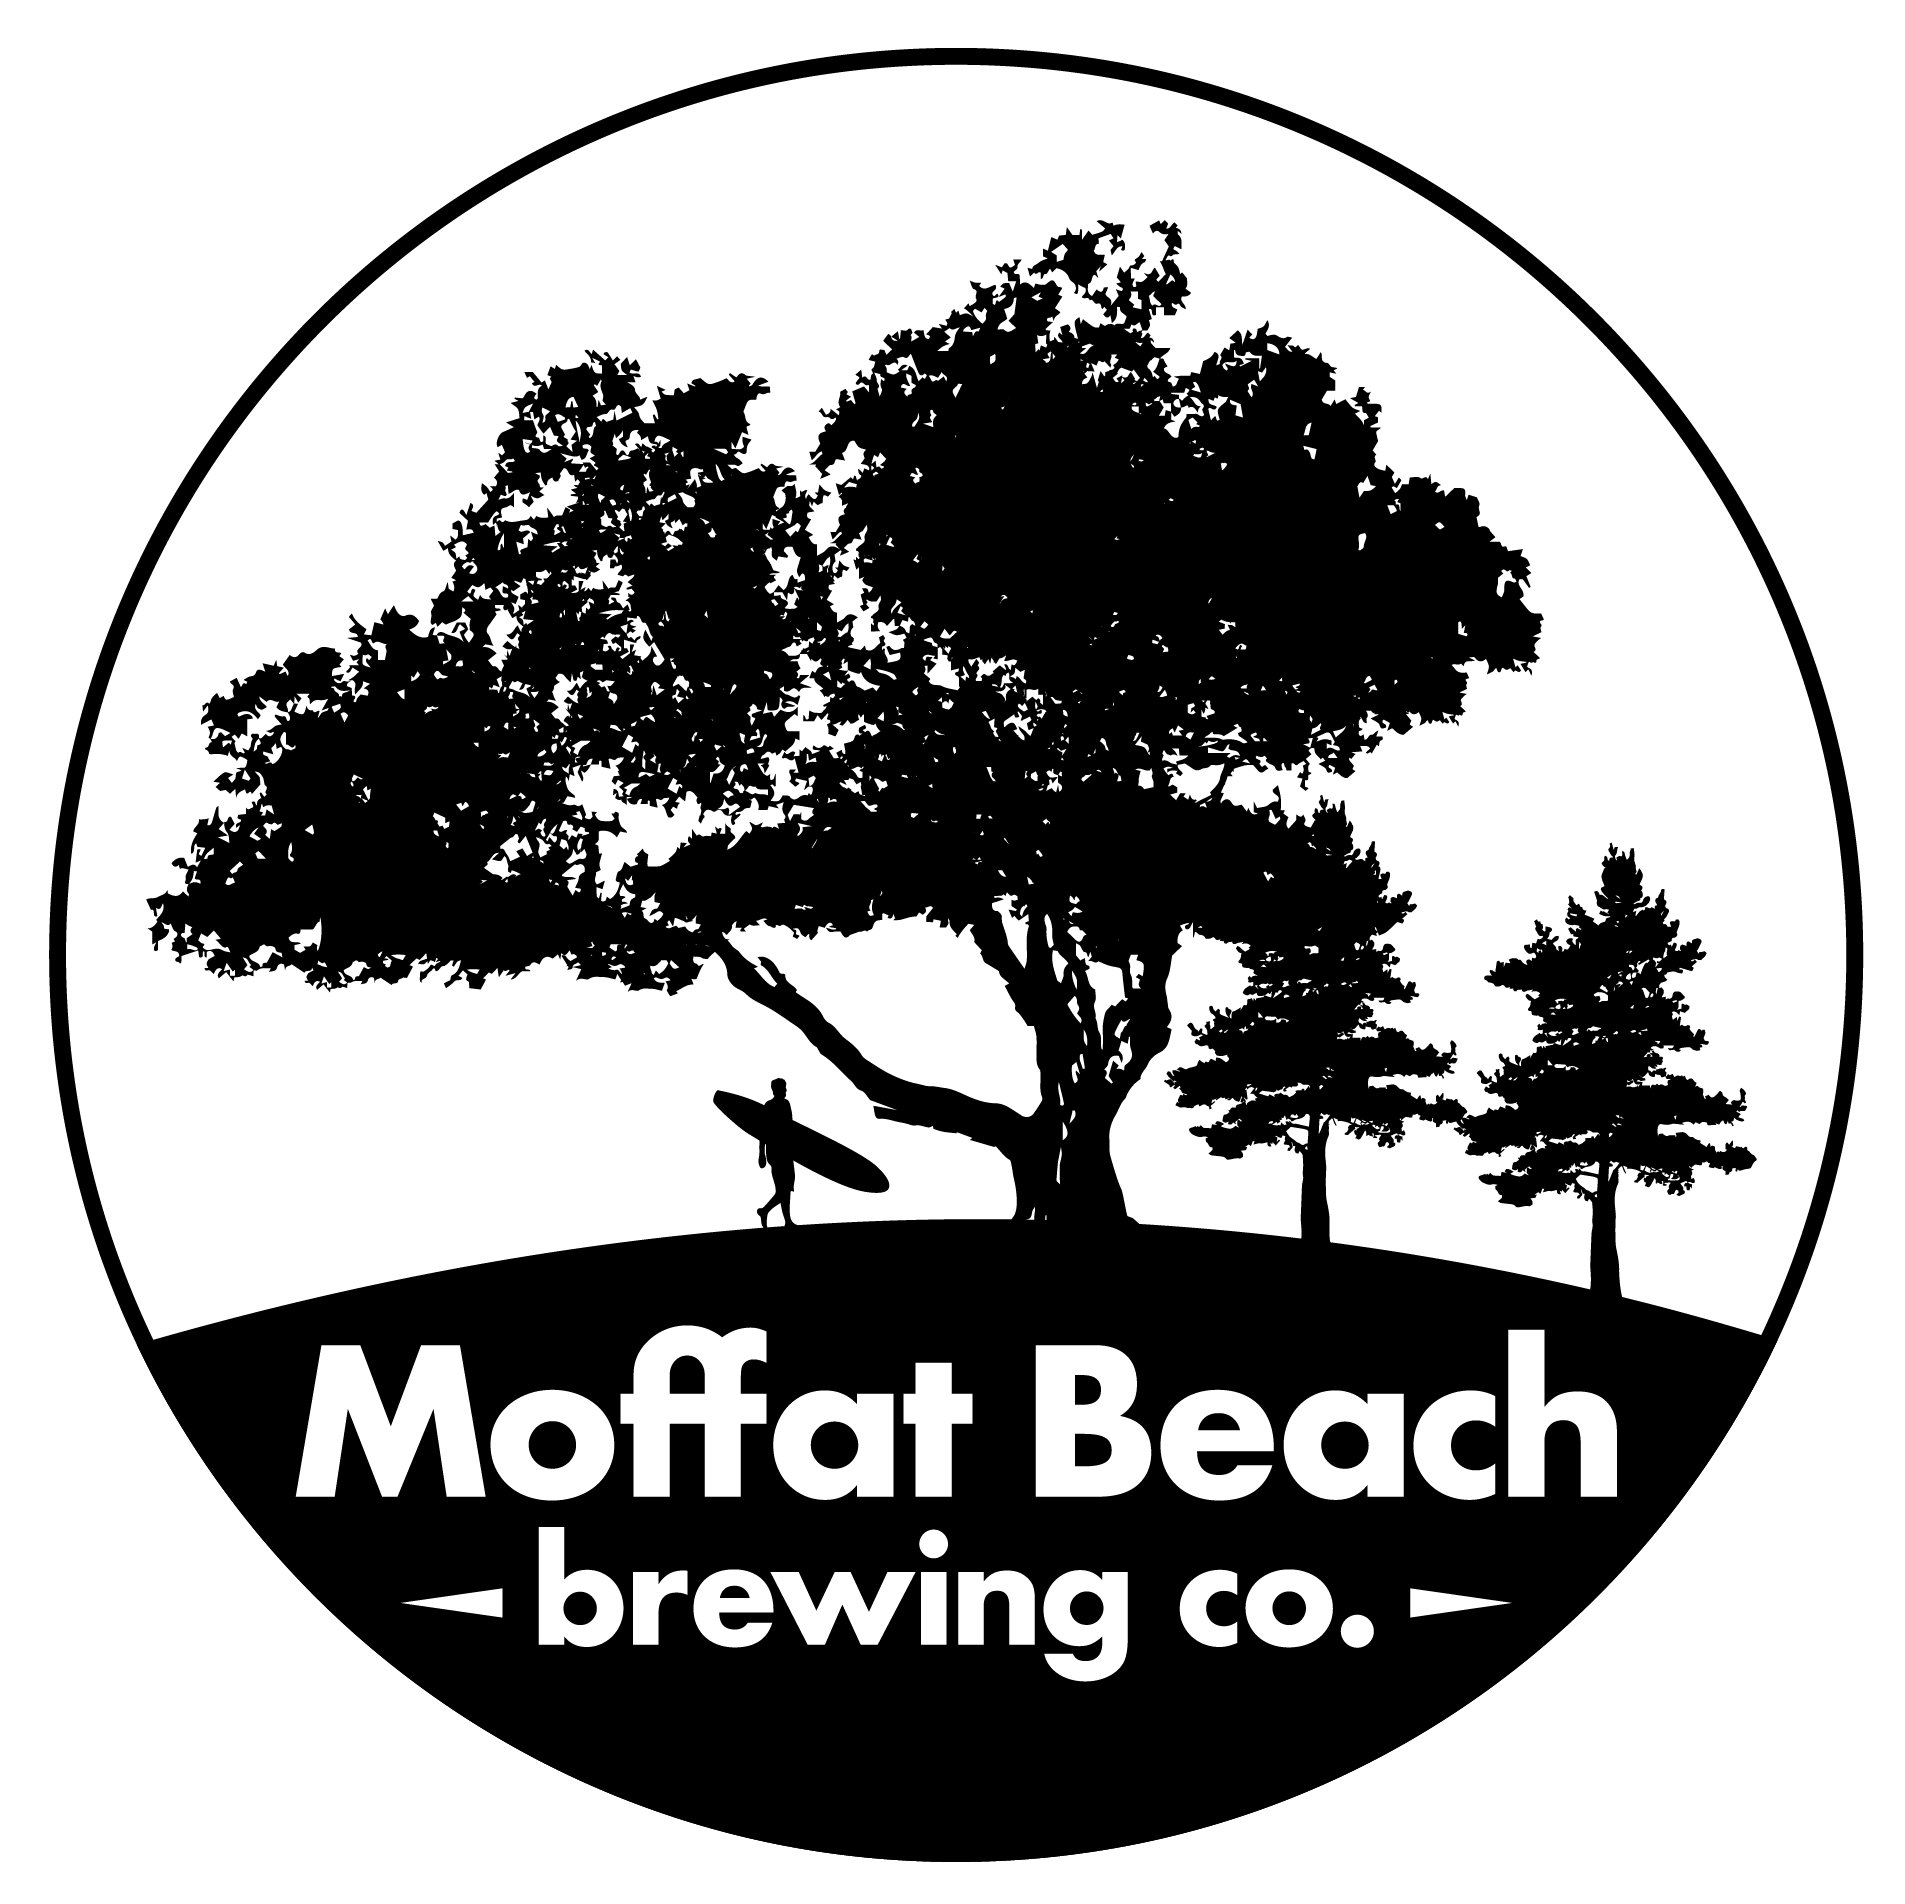 Moffat Beach Brewing Co